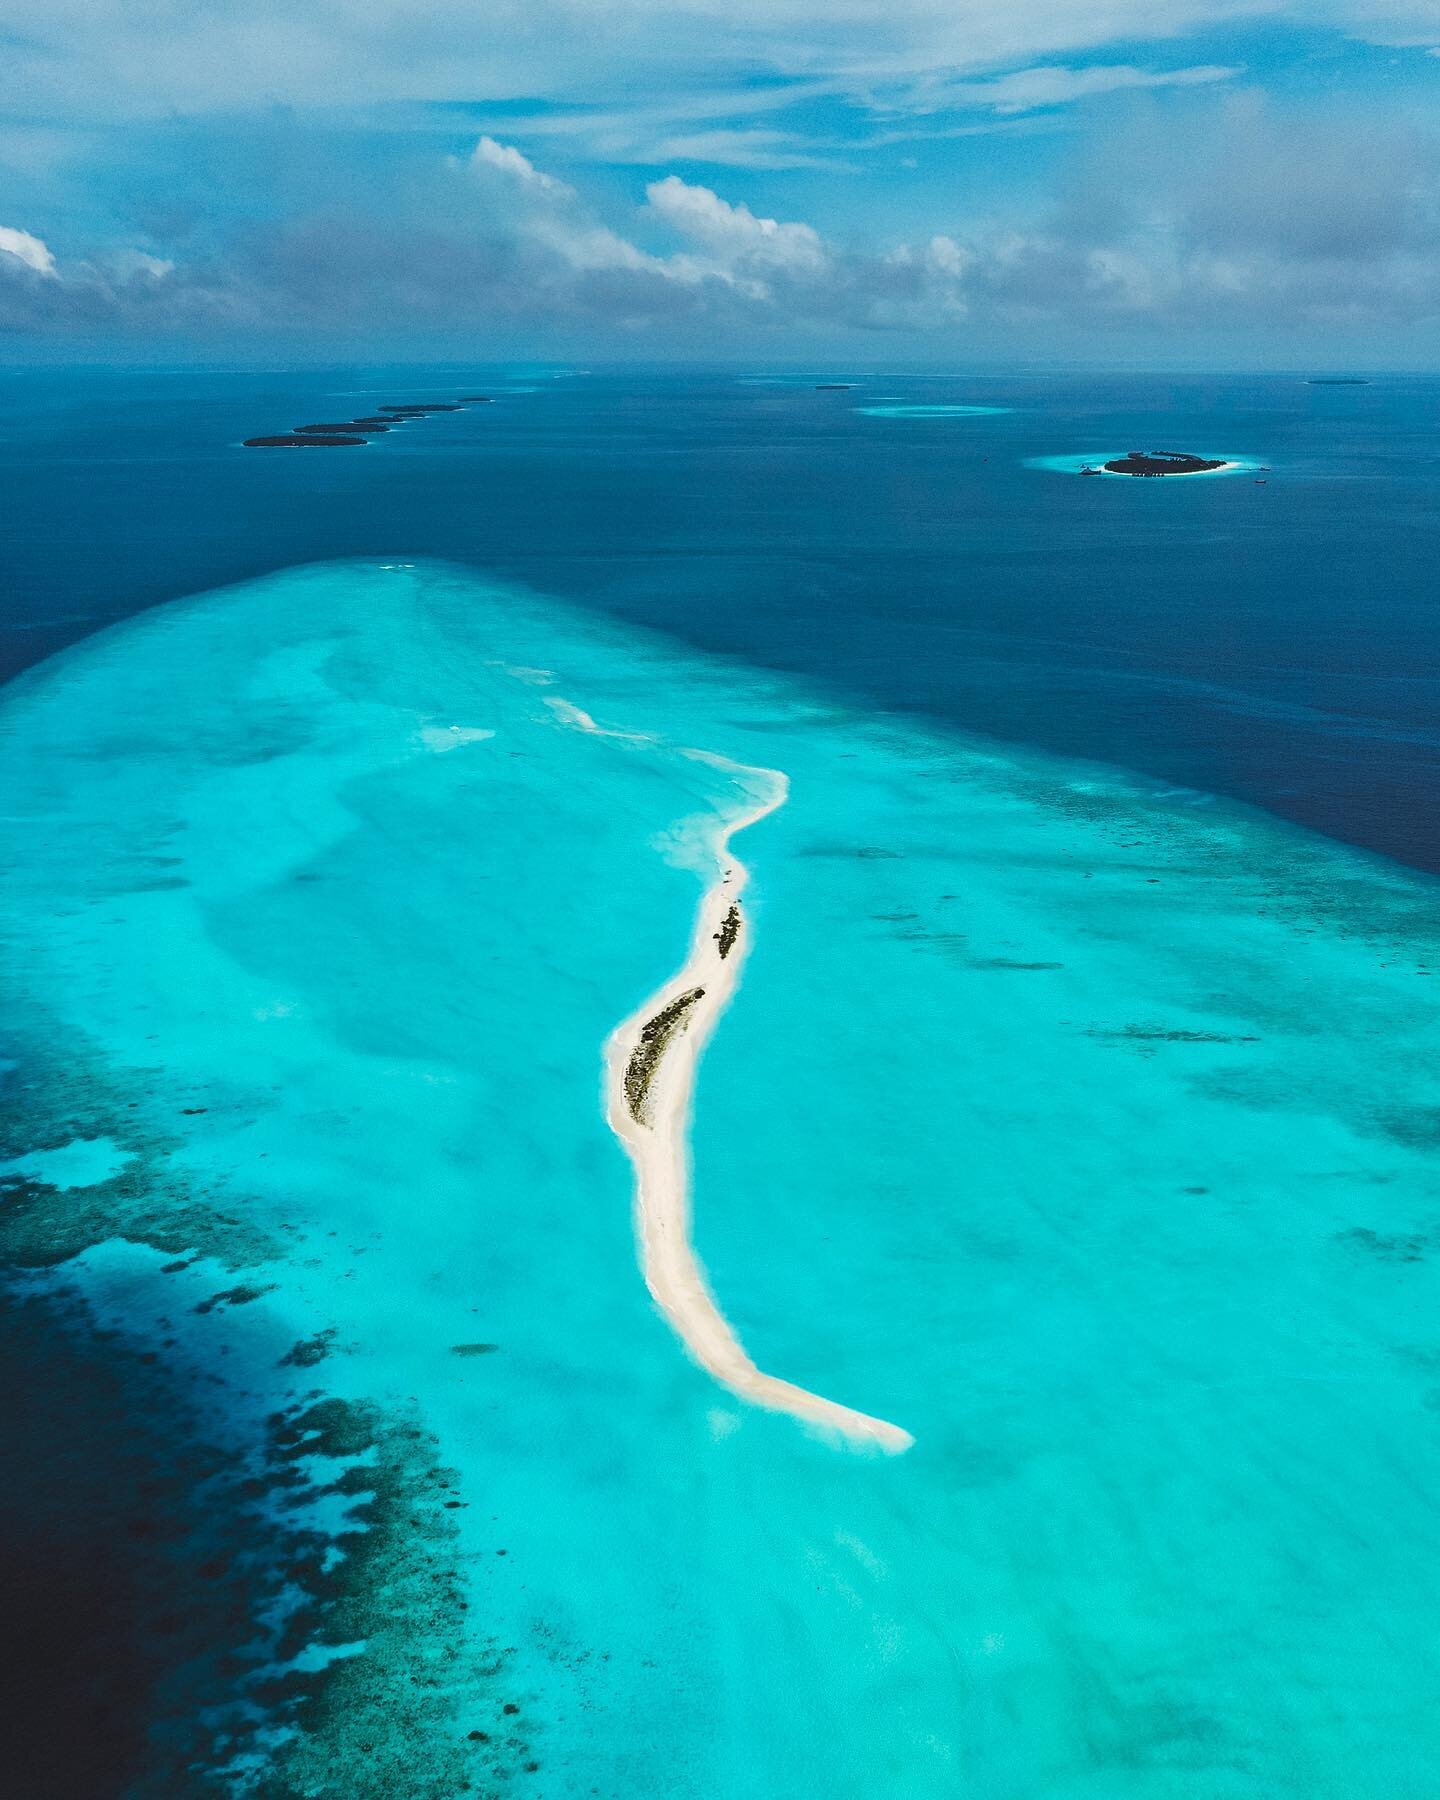 The places we go 🦋

#droneshots #maldiveslovers #islandtime